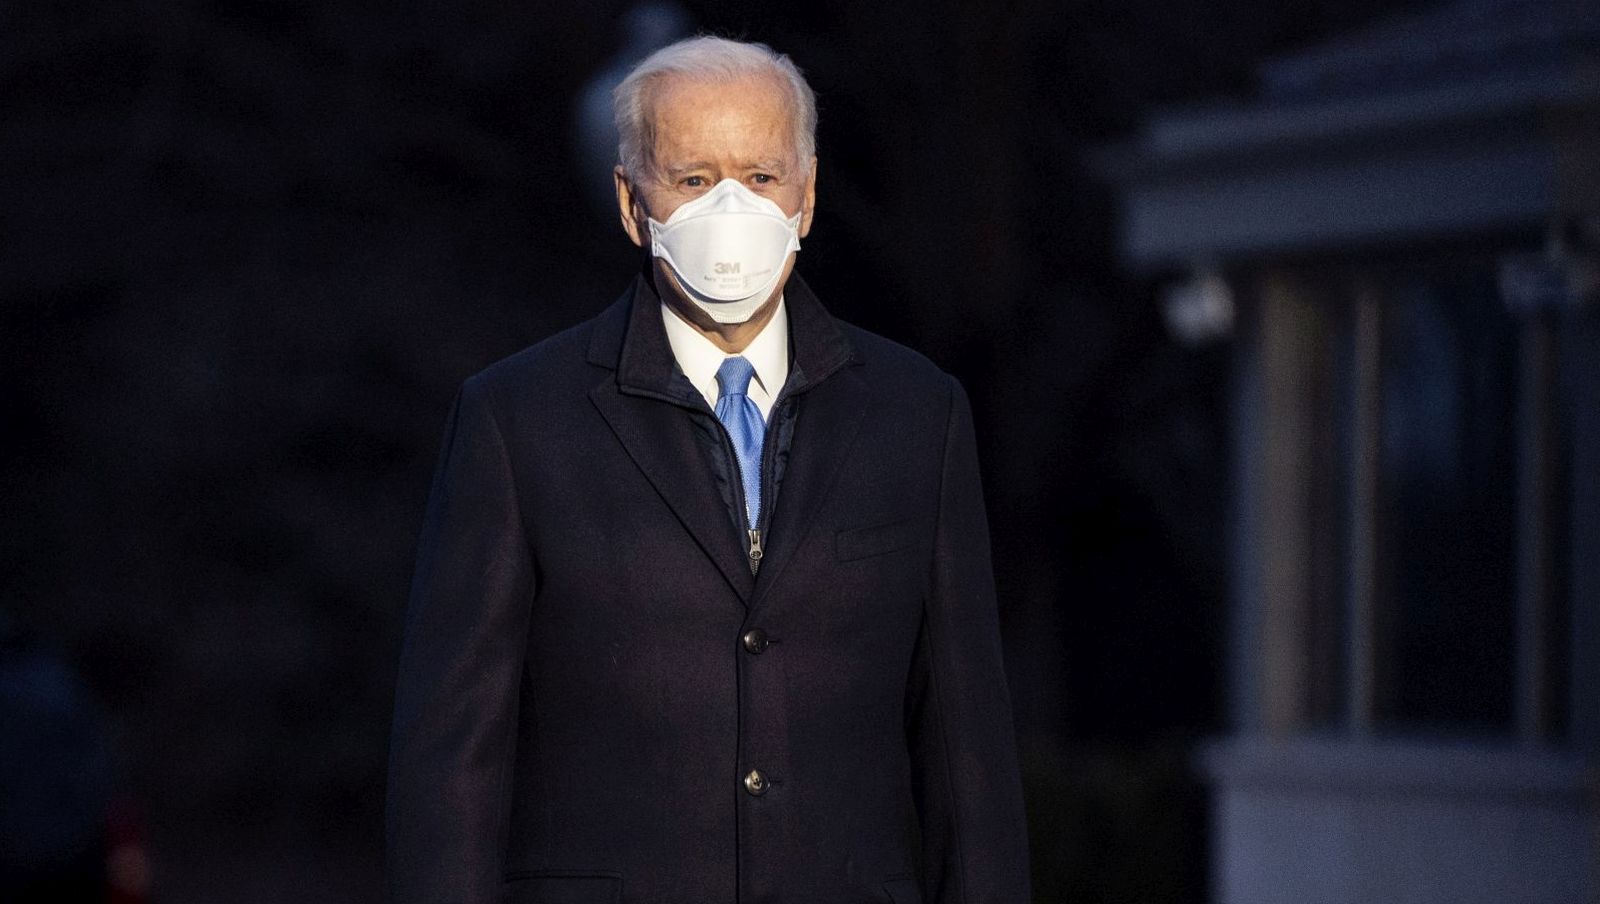 epa09007836 US President Joe Biden departs the White House for a weekend trip to Camp David, in Washington, DC, USA, 12 February 2021.  EPA/KEVIN DIETSCH / POOL